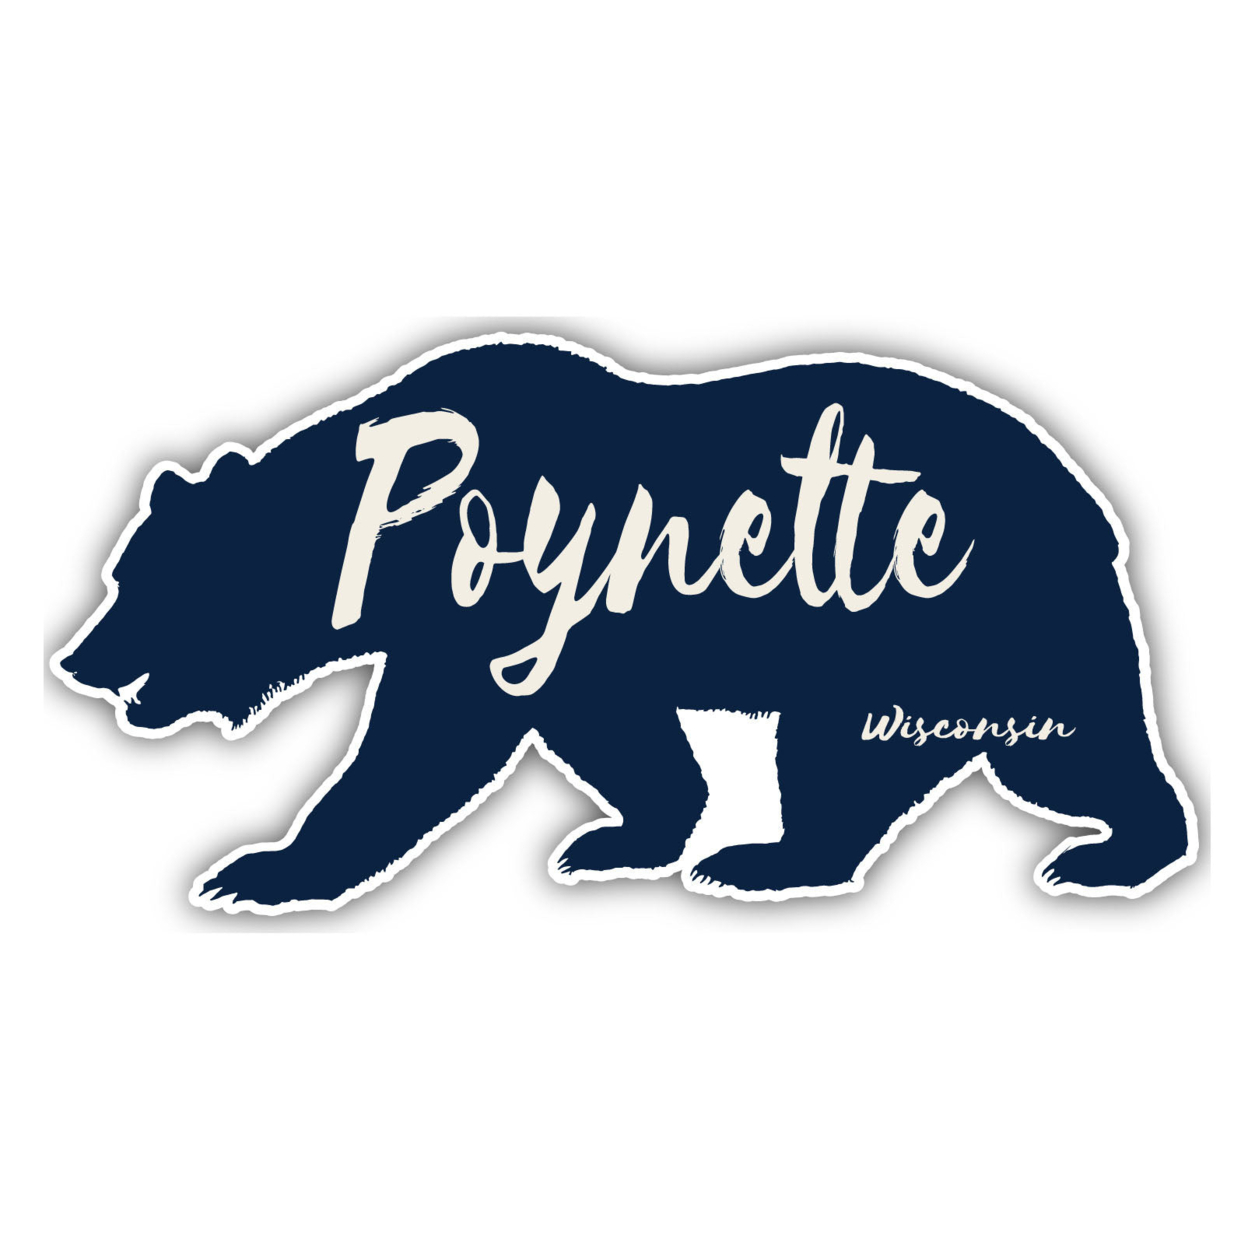 Poynette Wisconsin Souvenir Decorative Stickers (Choose Theme And Size) - Single Unit, 4-Inch, Bear